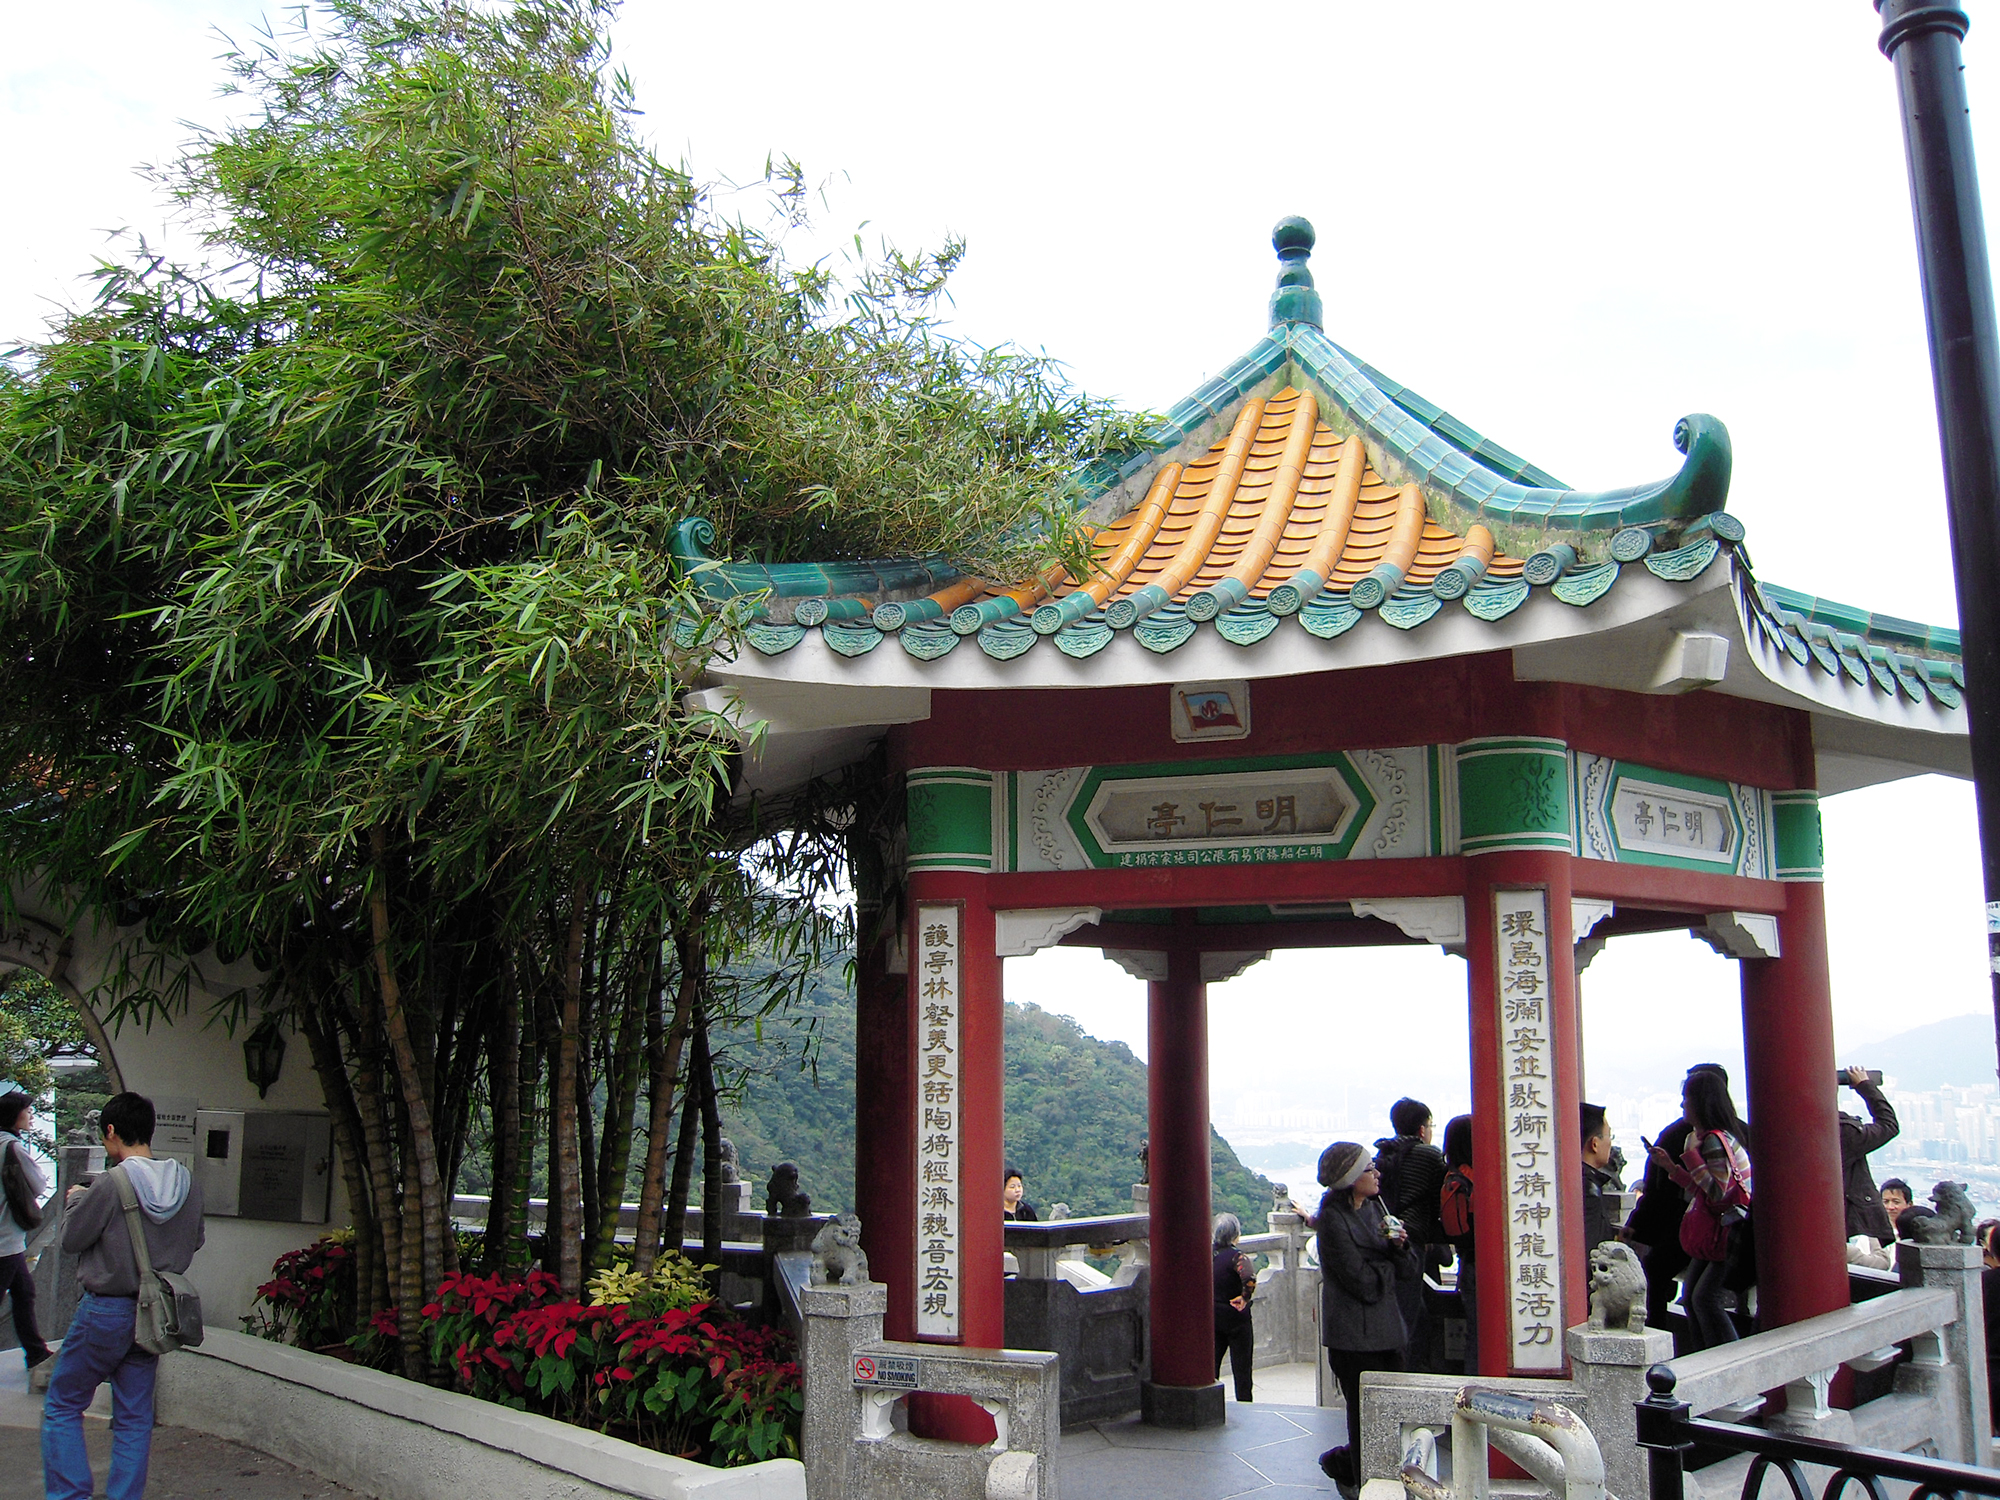 Hong Kong azië China The Piek View Hong Kong city travel reis reizen lifestyle by linda